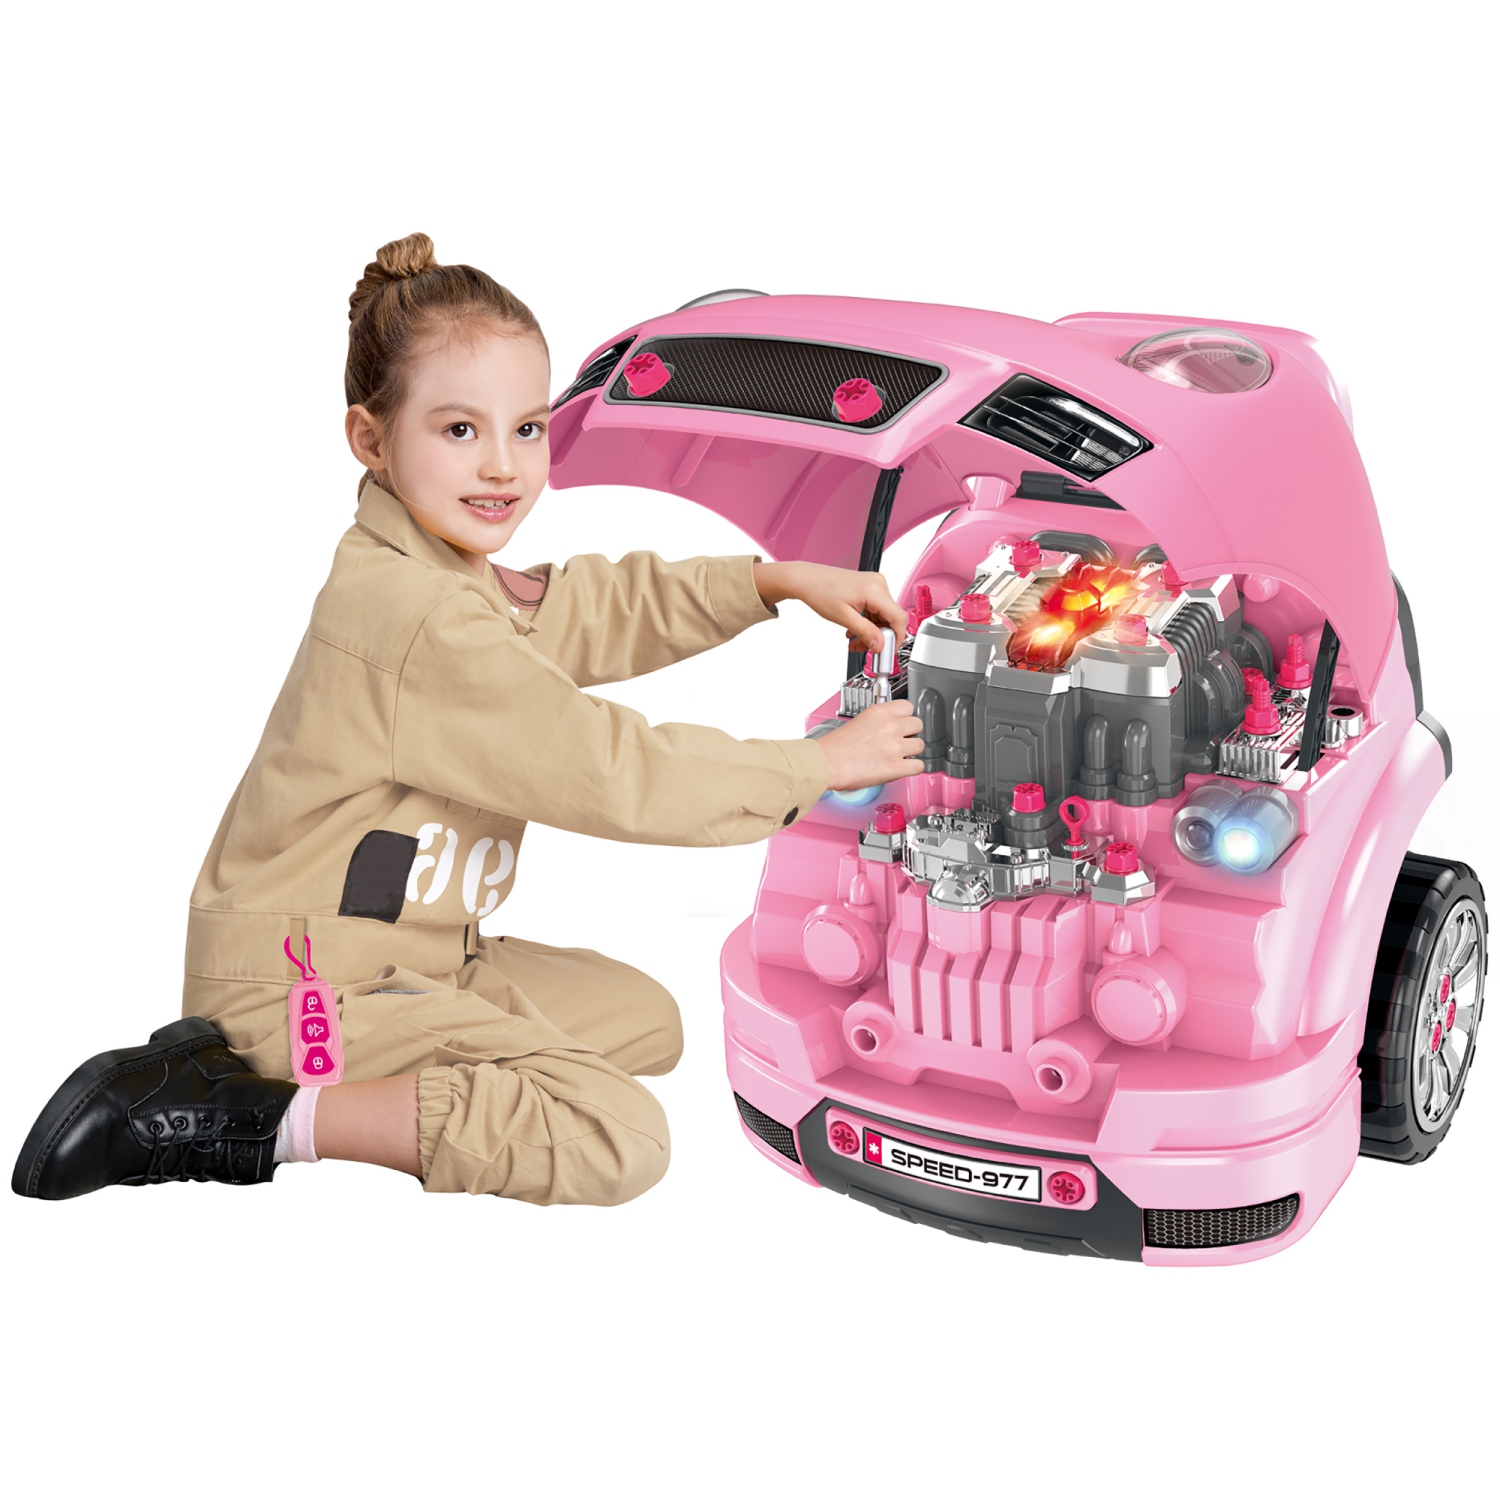 Qaba Kids Truck Engine Toy Set, Educational Car Service Station Kids Tool Set, Take Apart Workshop, w/ Steering Wheel, Horn, Light, RC Car Key, for 3-5 Years Old Pink